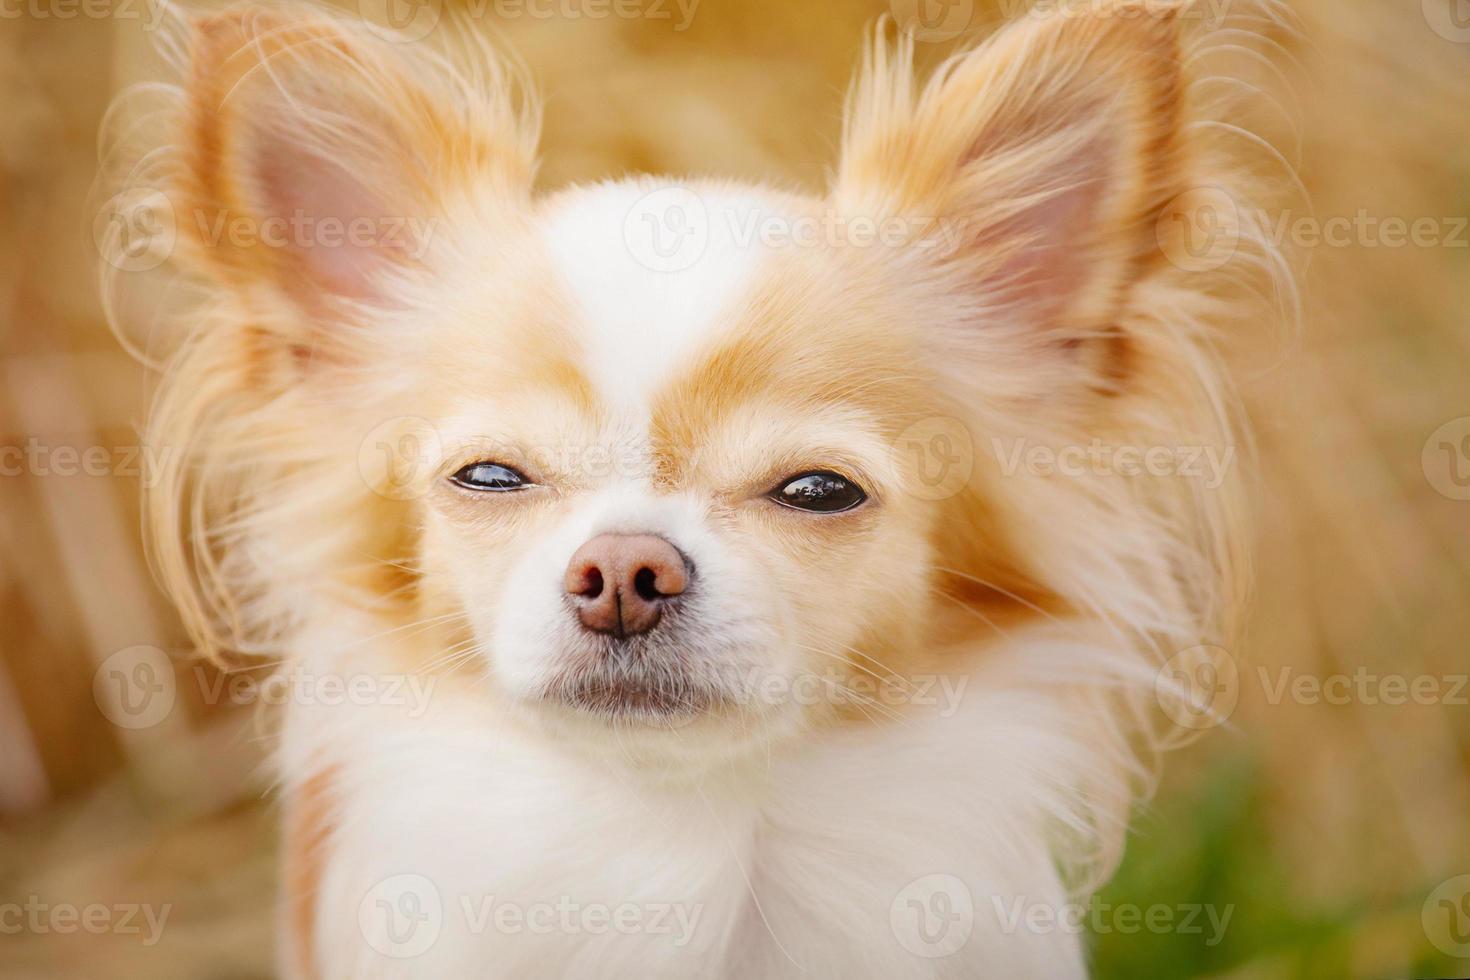 Close-up portrait of a small Chihuahua dog. Animal, pet. photo